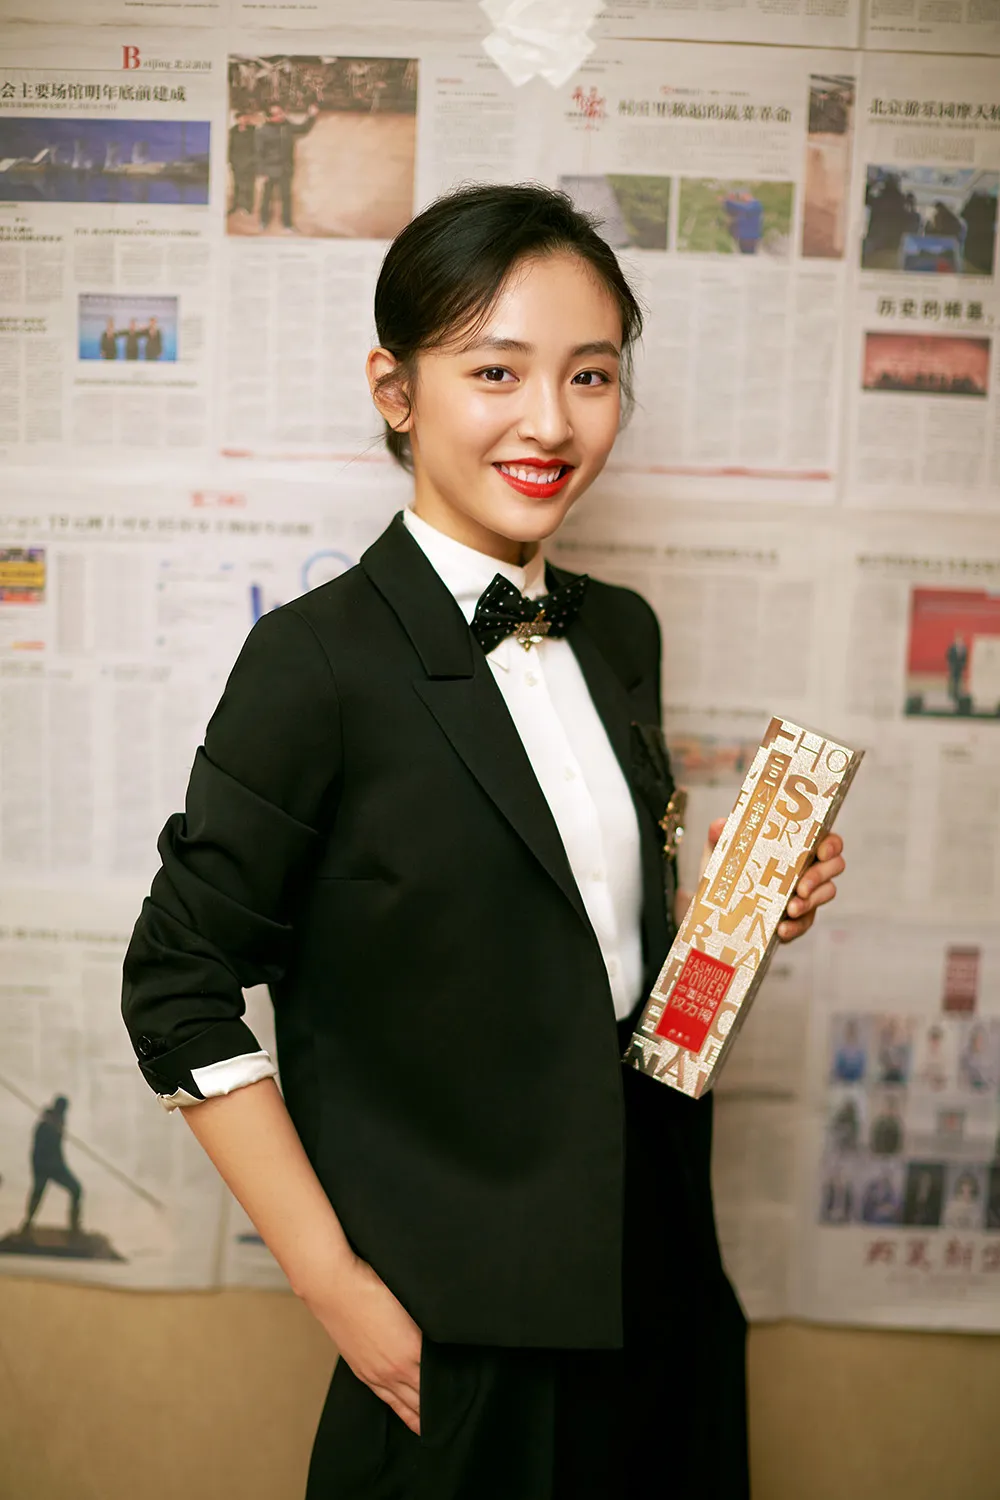  Wu Qian (actress) 获年度最具潜力女艺人奖.jpg